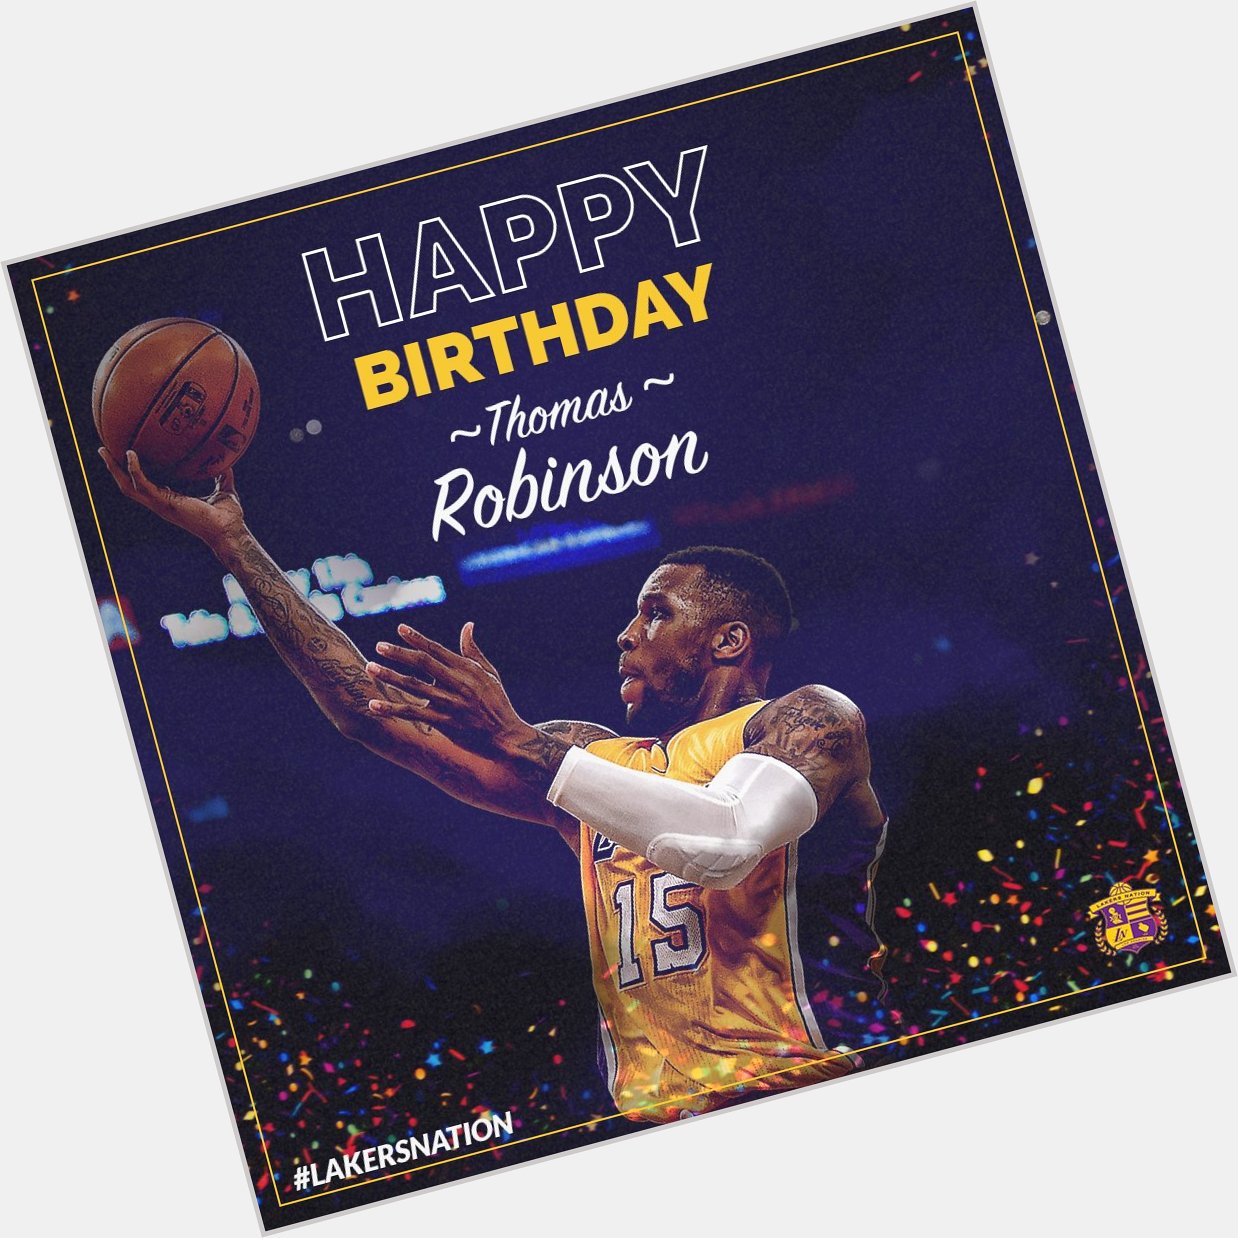 Join us in wishing Lakers forward Thomas Robinson ( a Happy Birthday! 